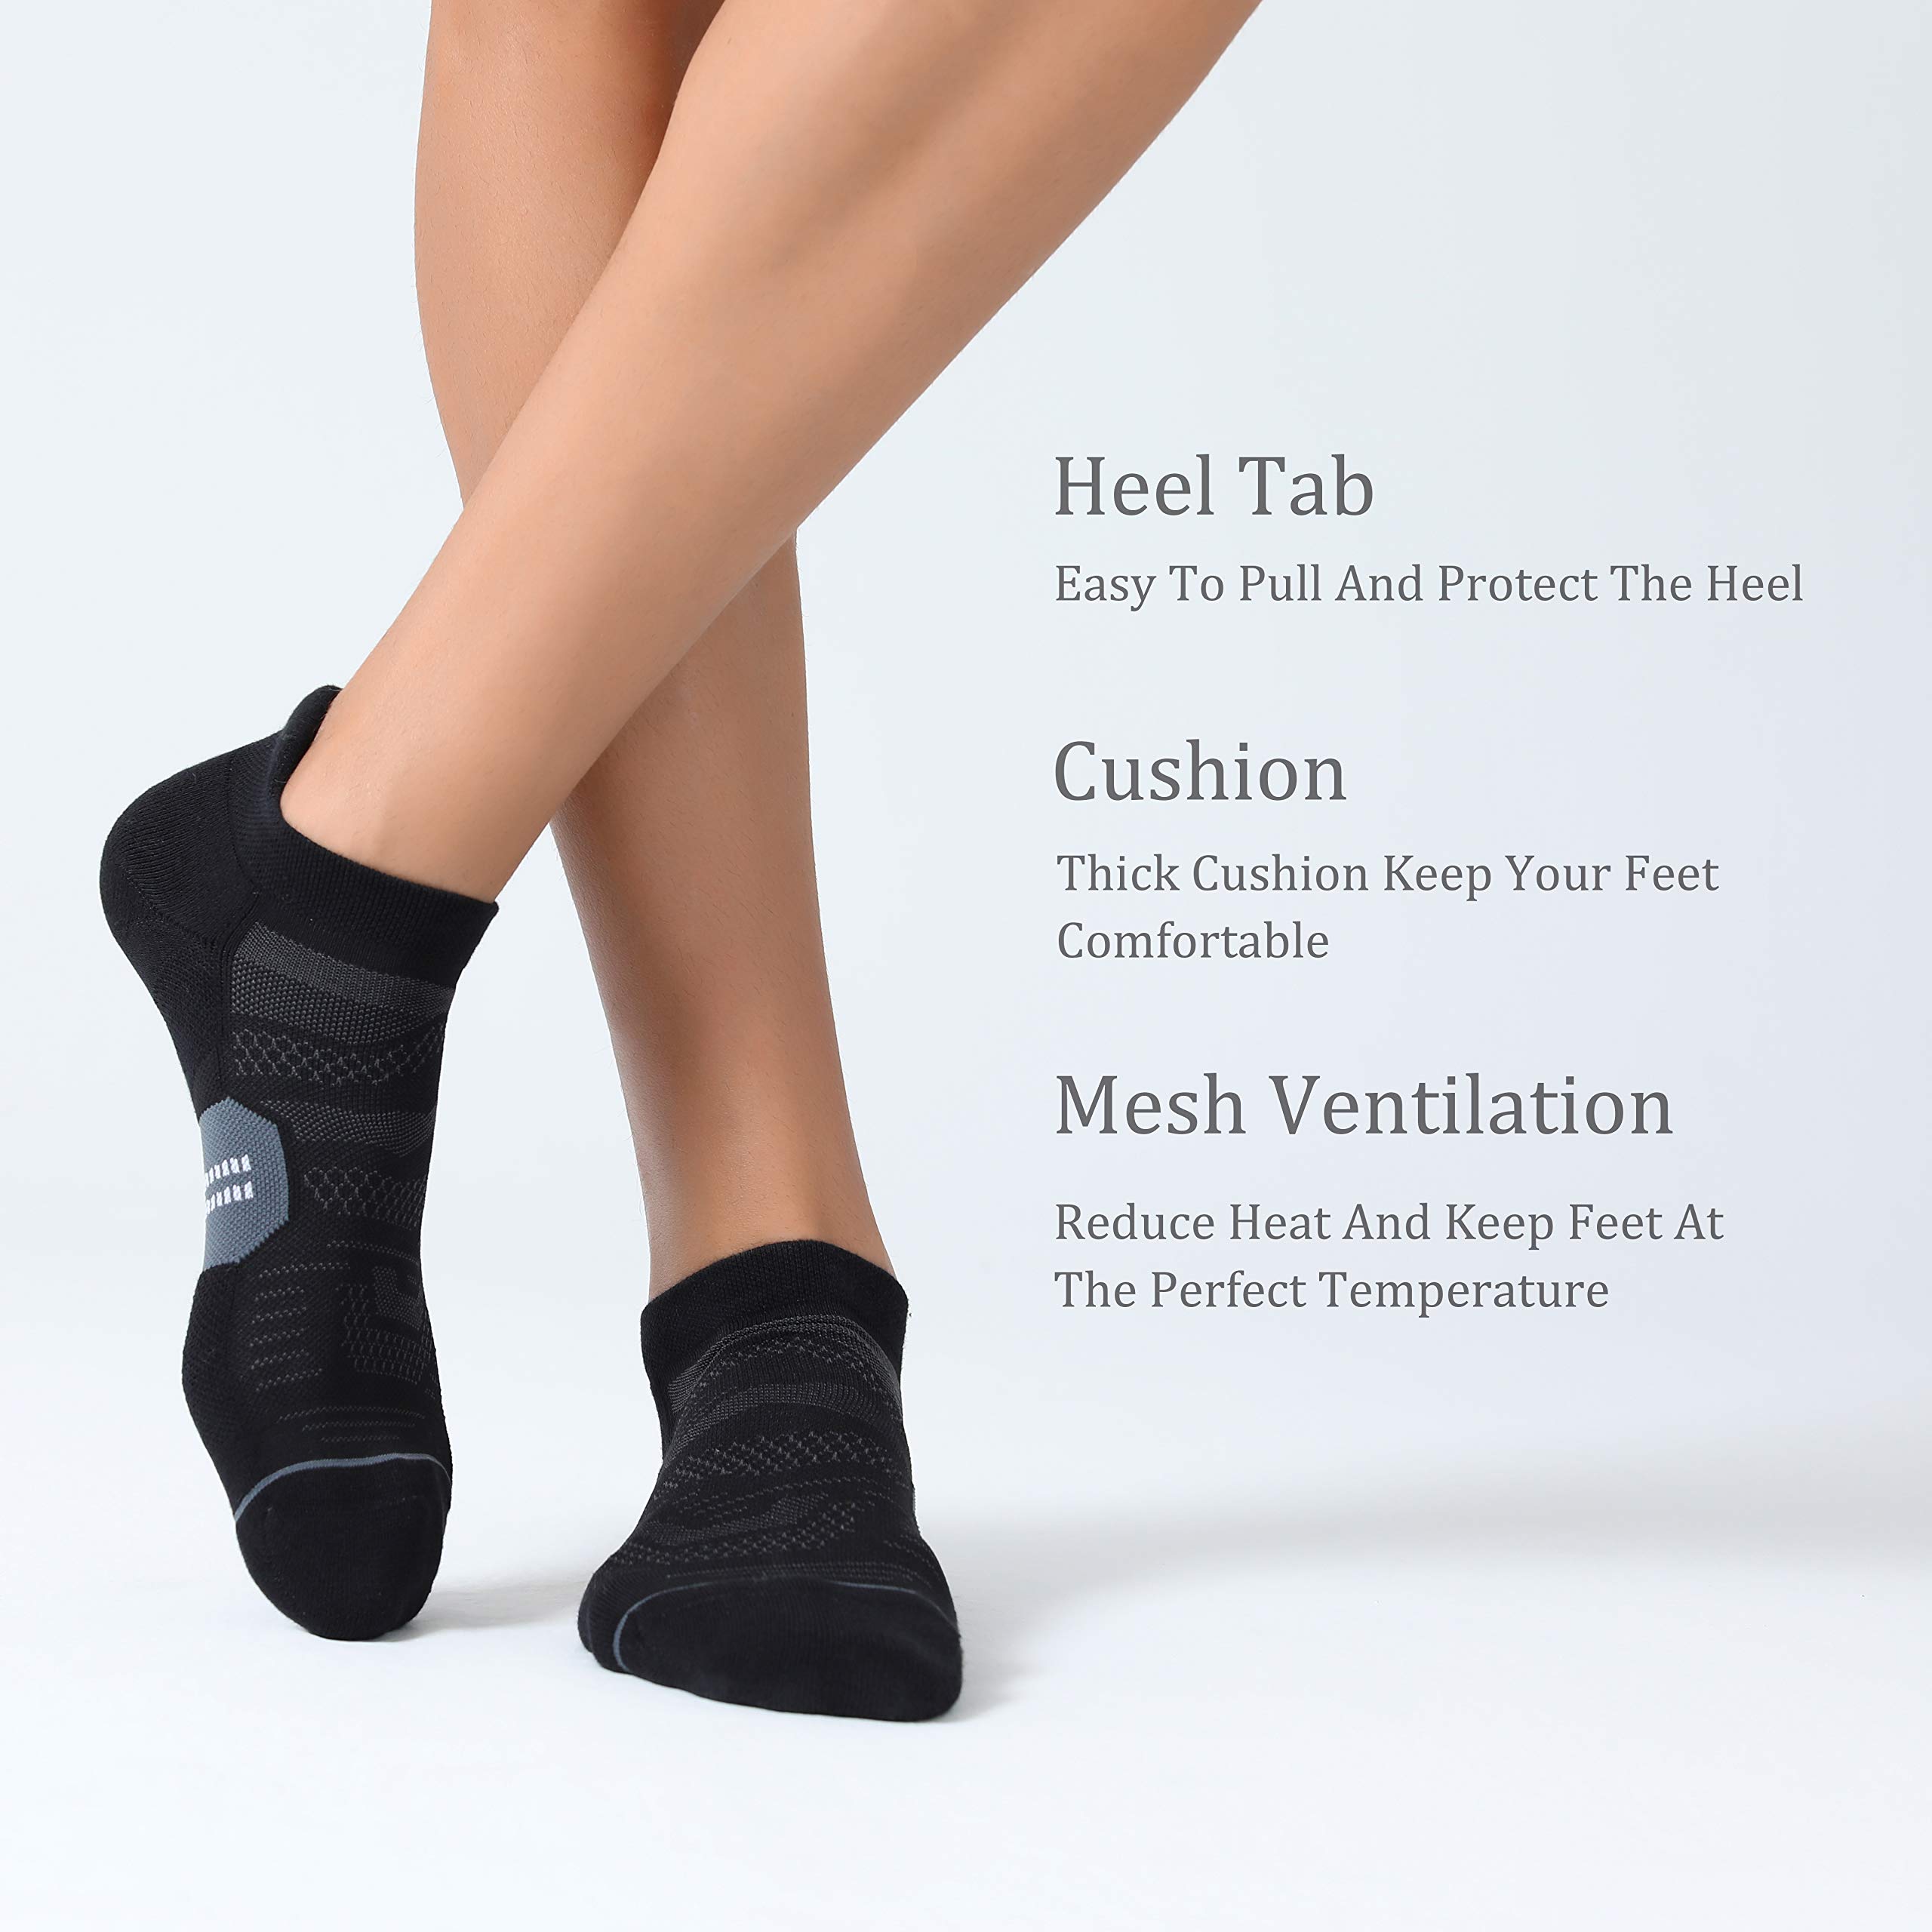 CelerSport 6 Pack Men's Running Ankle Socks with Cushion, Low Cut Athletic Tab Socks, Black + Grey, Medium